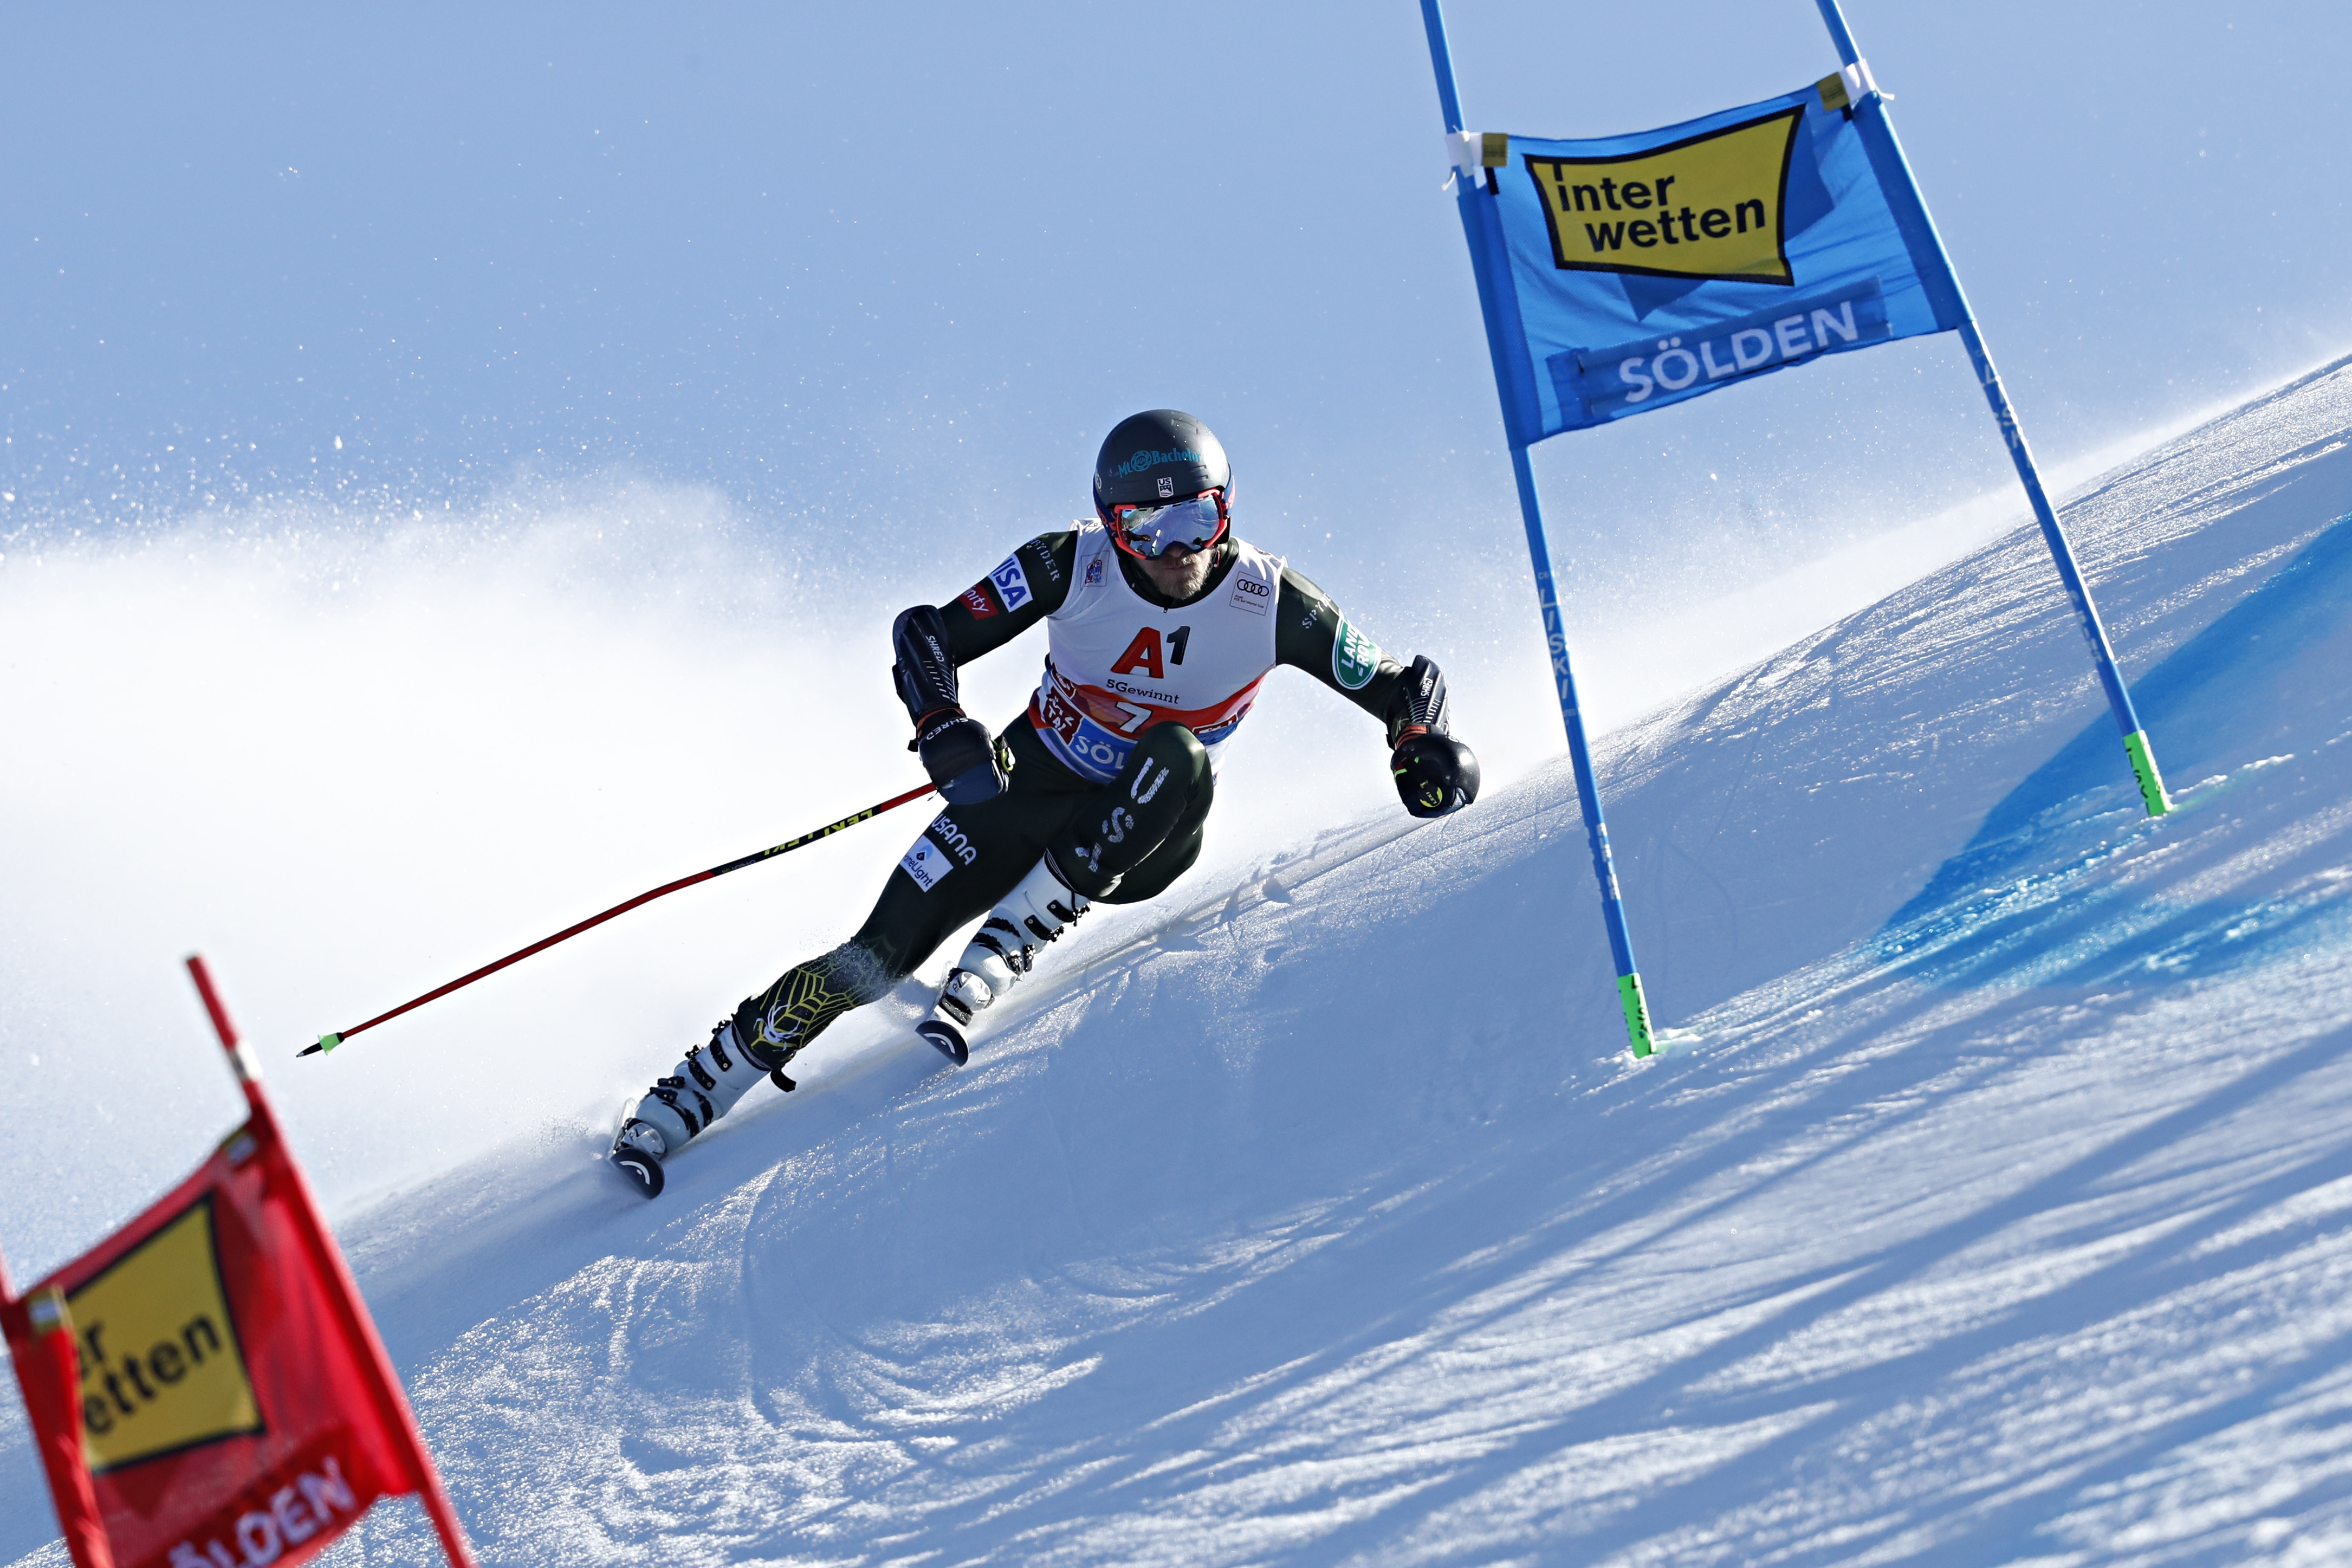 FIS Announces Earlier Start to 202021 Alpine World Cup Season